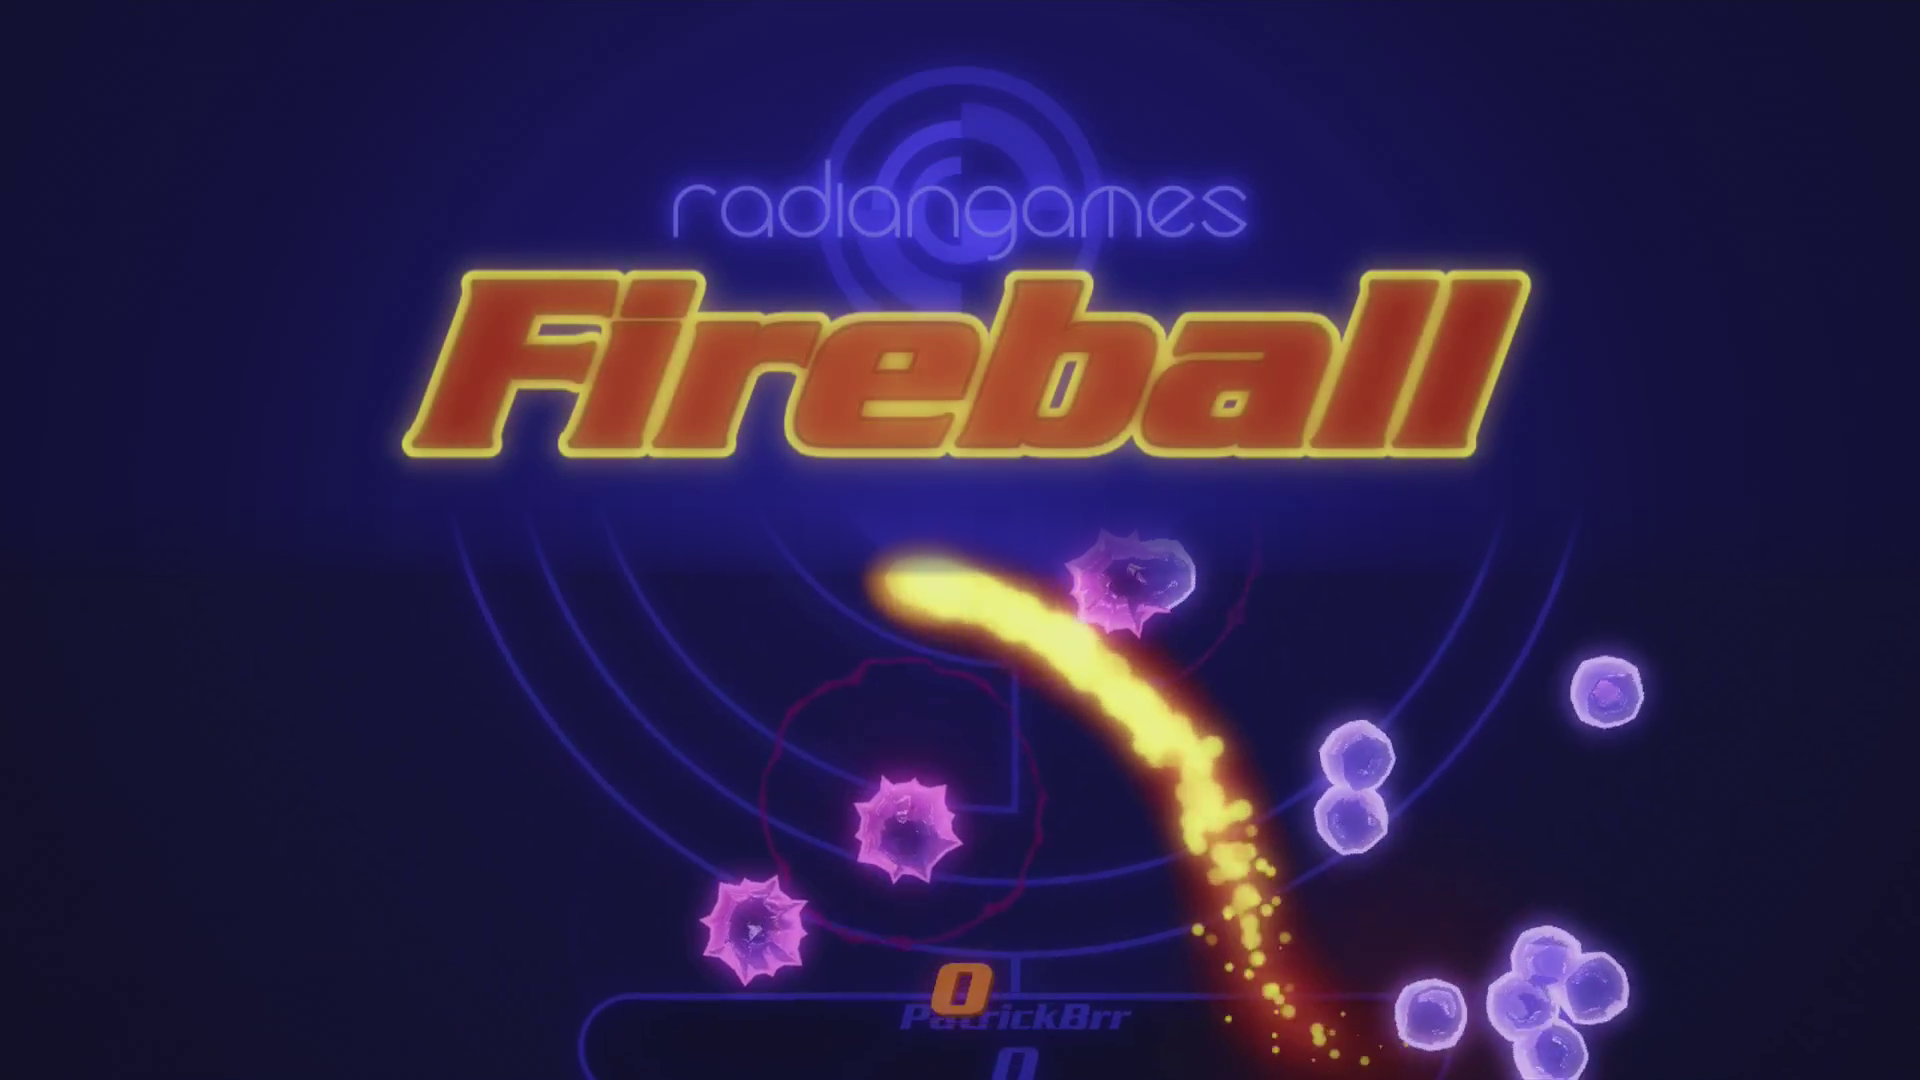 radiangames Fireball